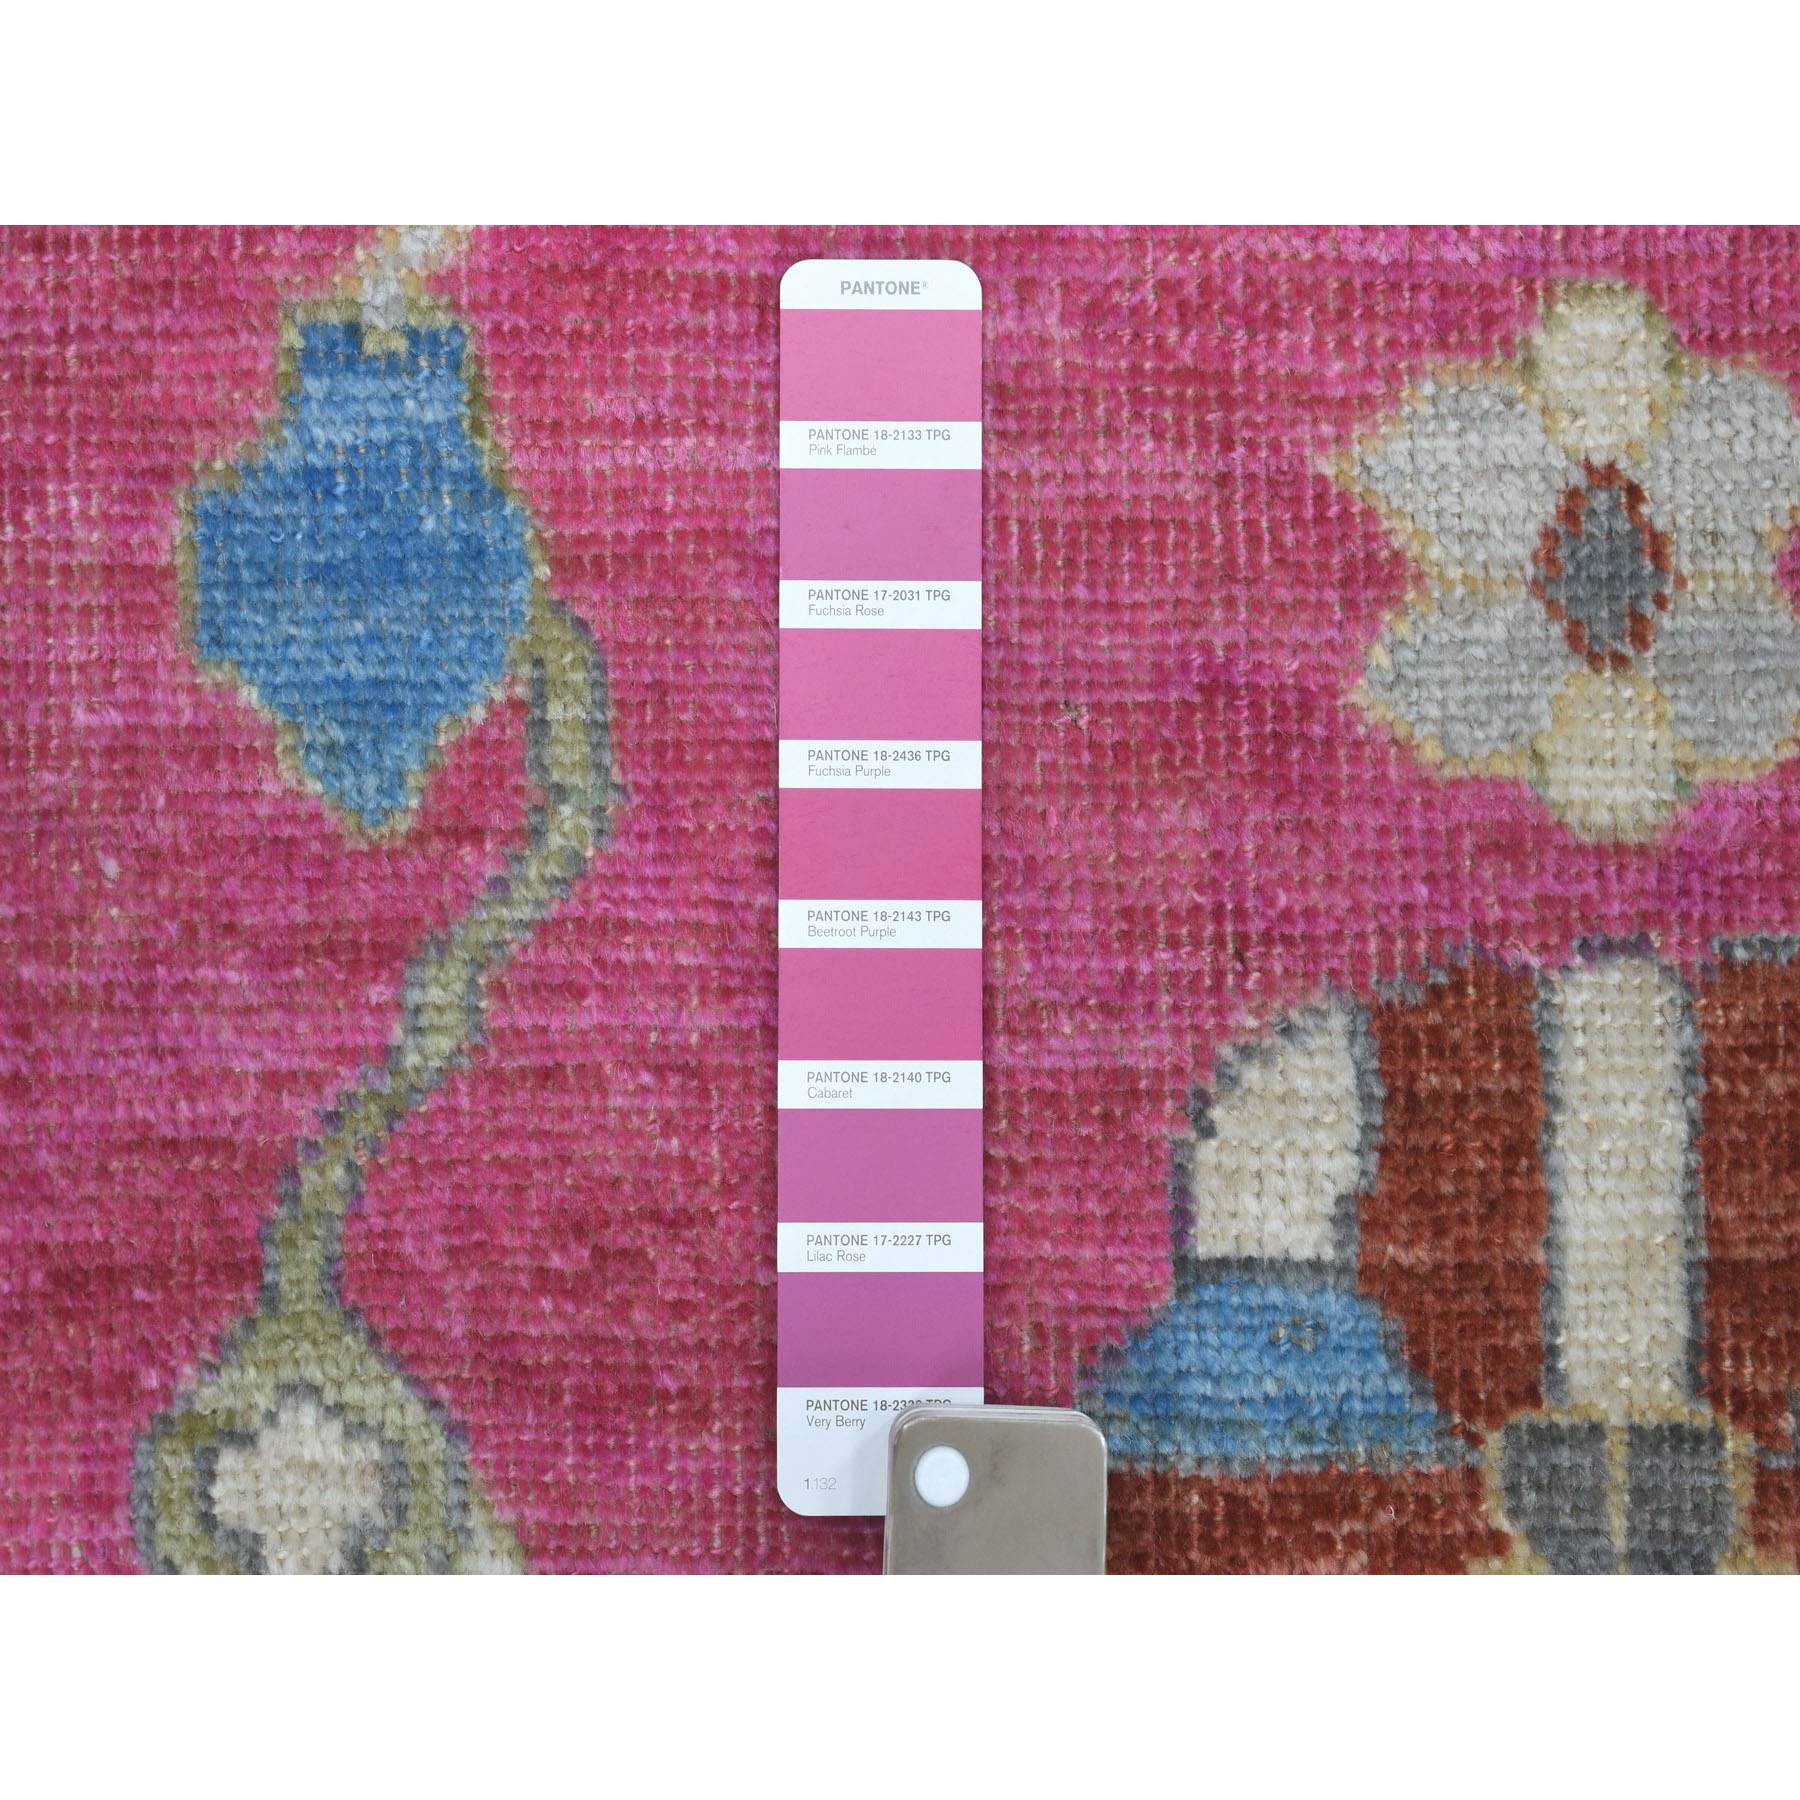 11-10 x14-6  Pink Oversized Angora Oushak Soft Velvety Wool Hand Knotted Oriental Rug 